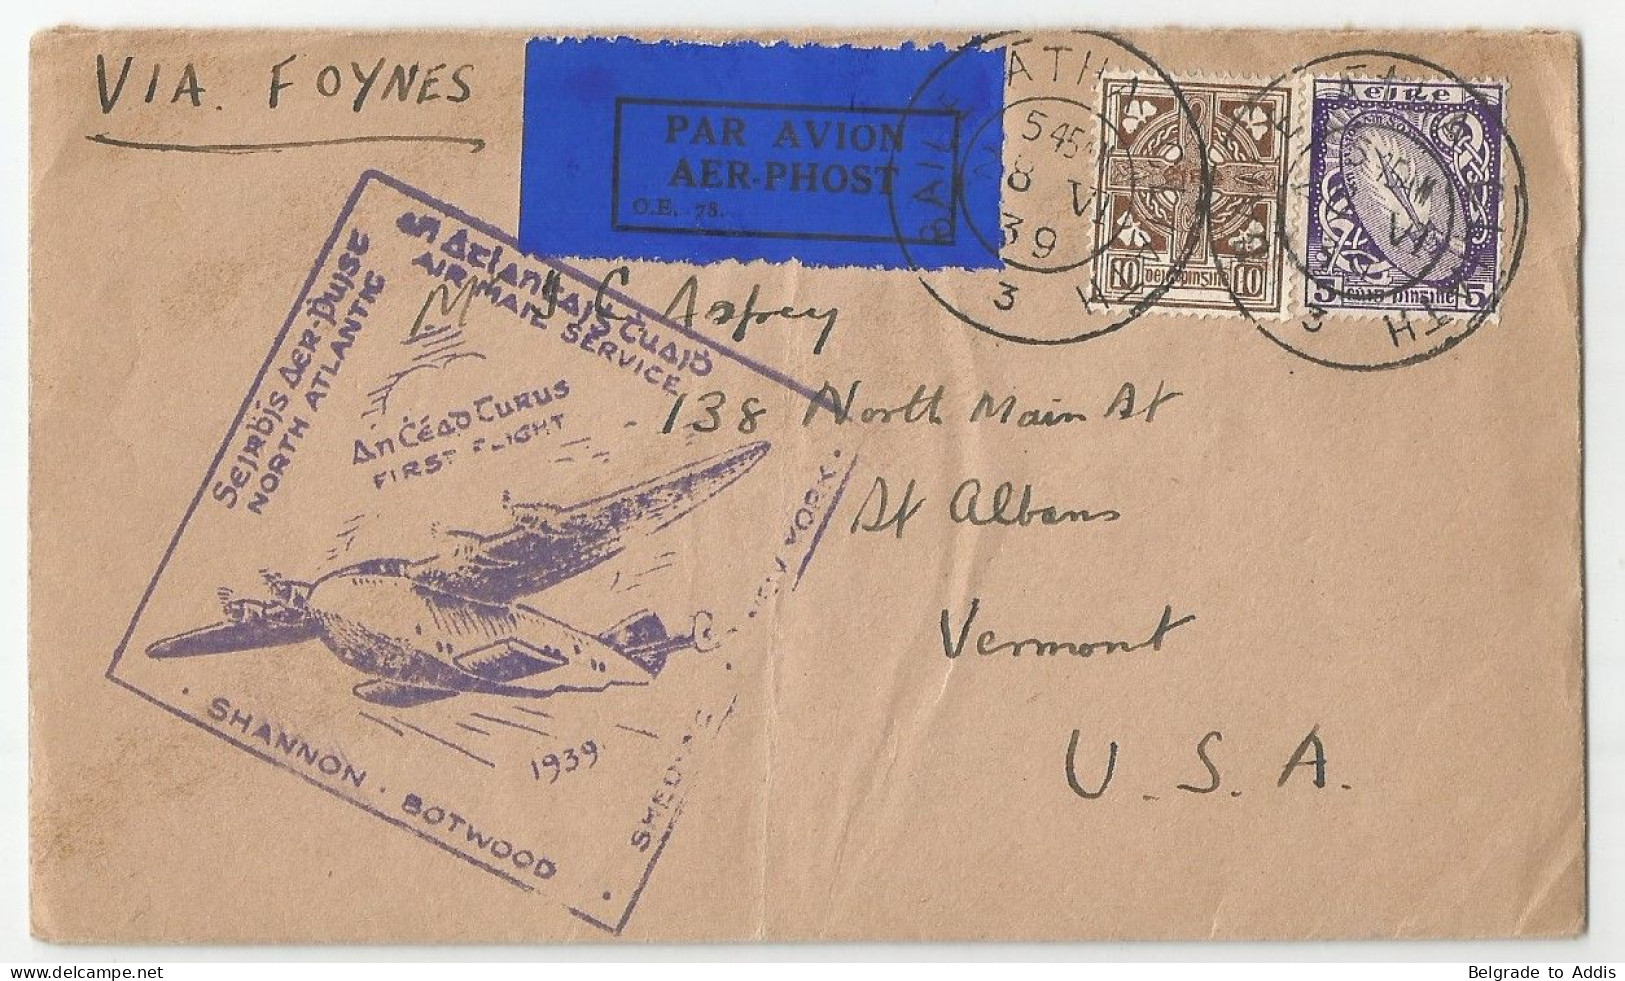 Ireland Eire USA First Flight Cover Air Mail Shannon - Botwood - Shediac - New York 1939 Via Foynes - Luftpost